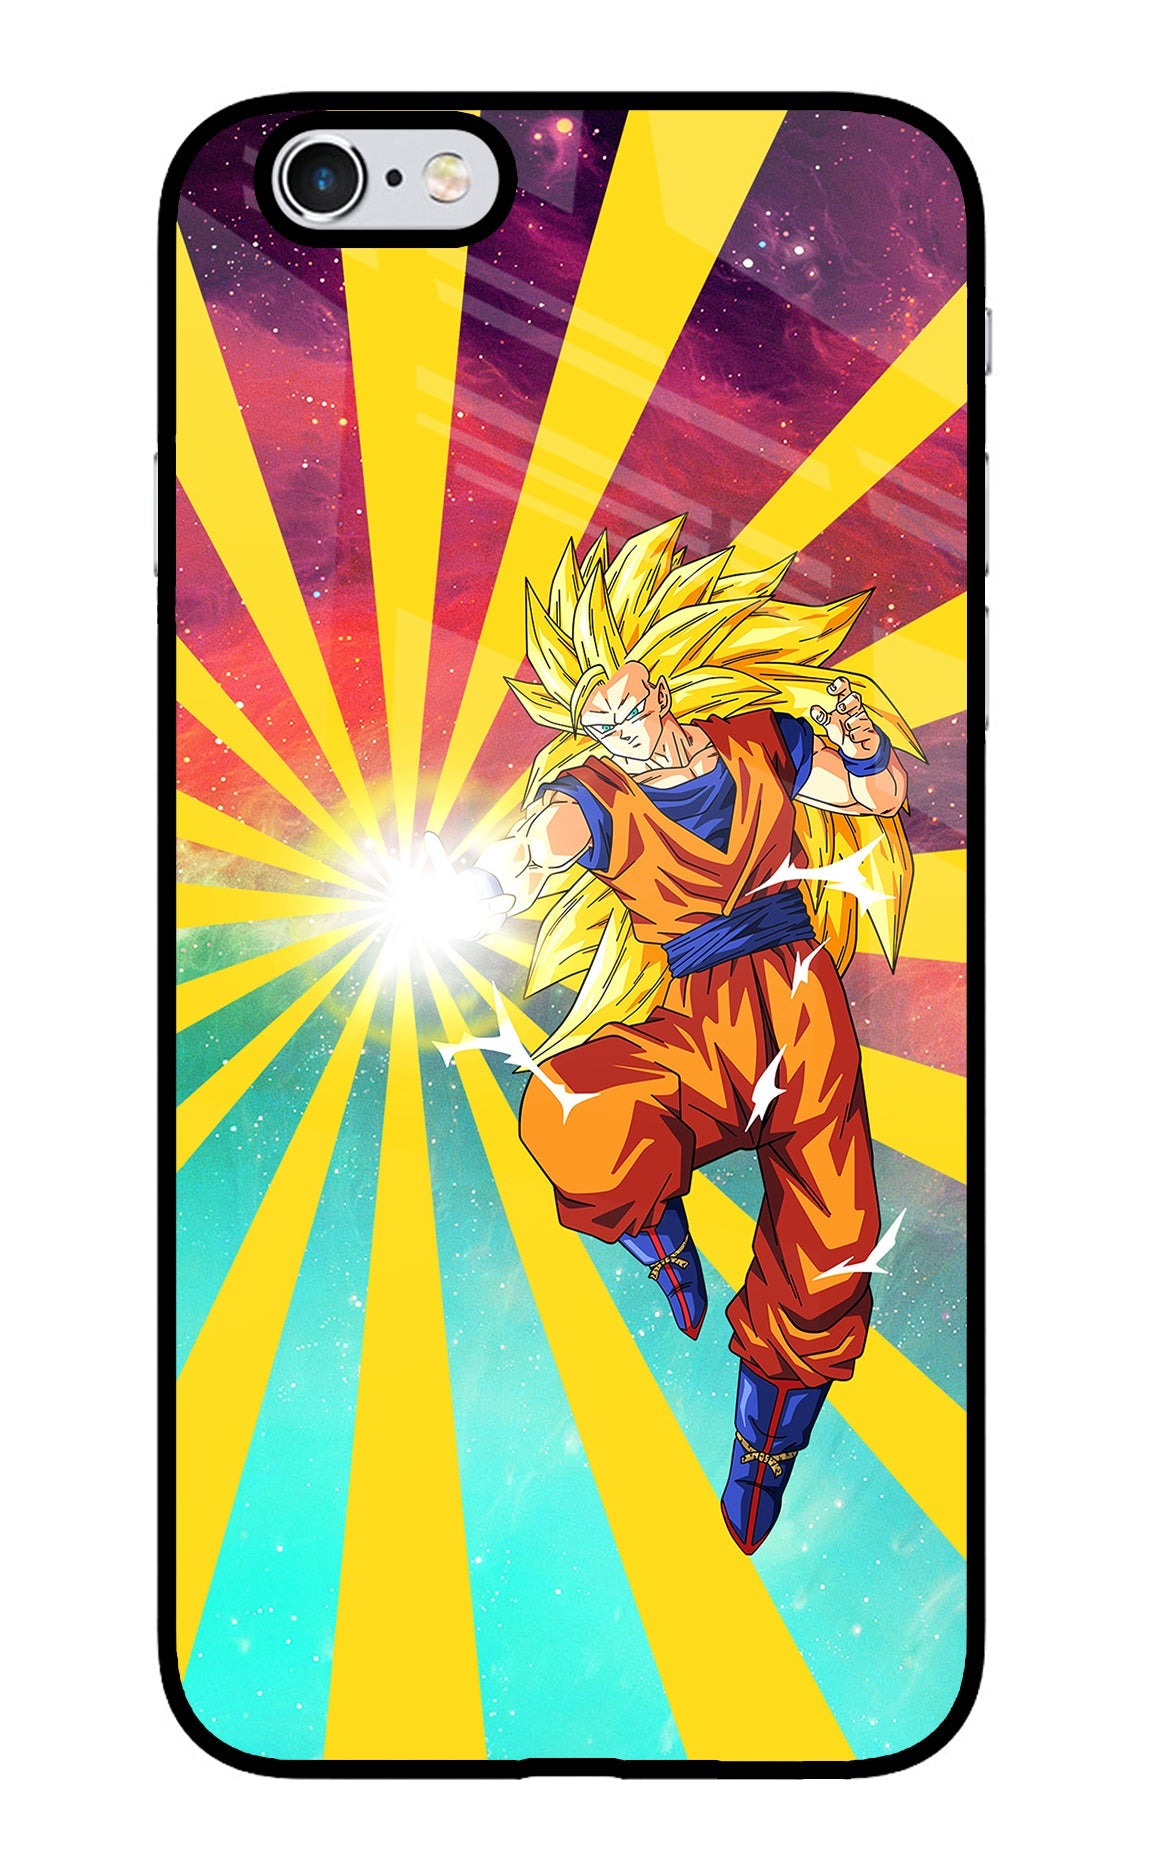 Goku Super Saiyan iPhone 6/6s Back Cover